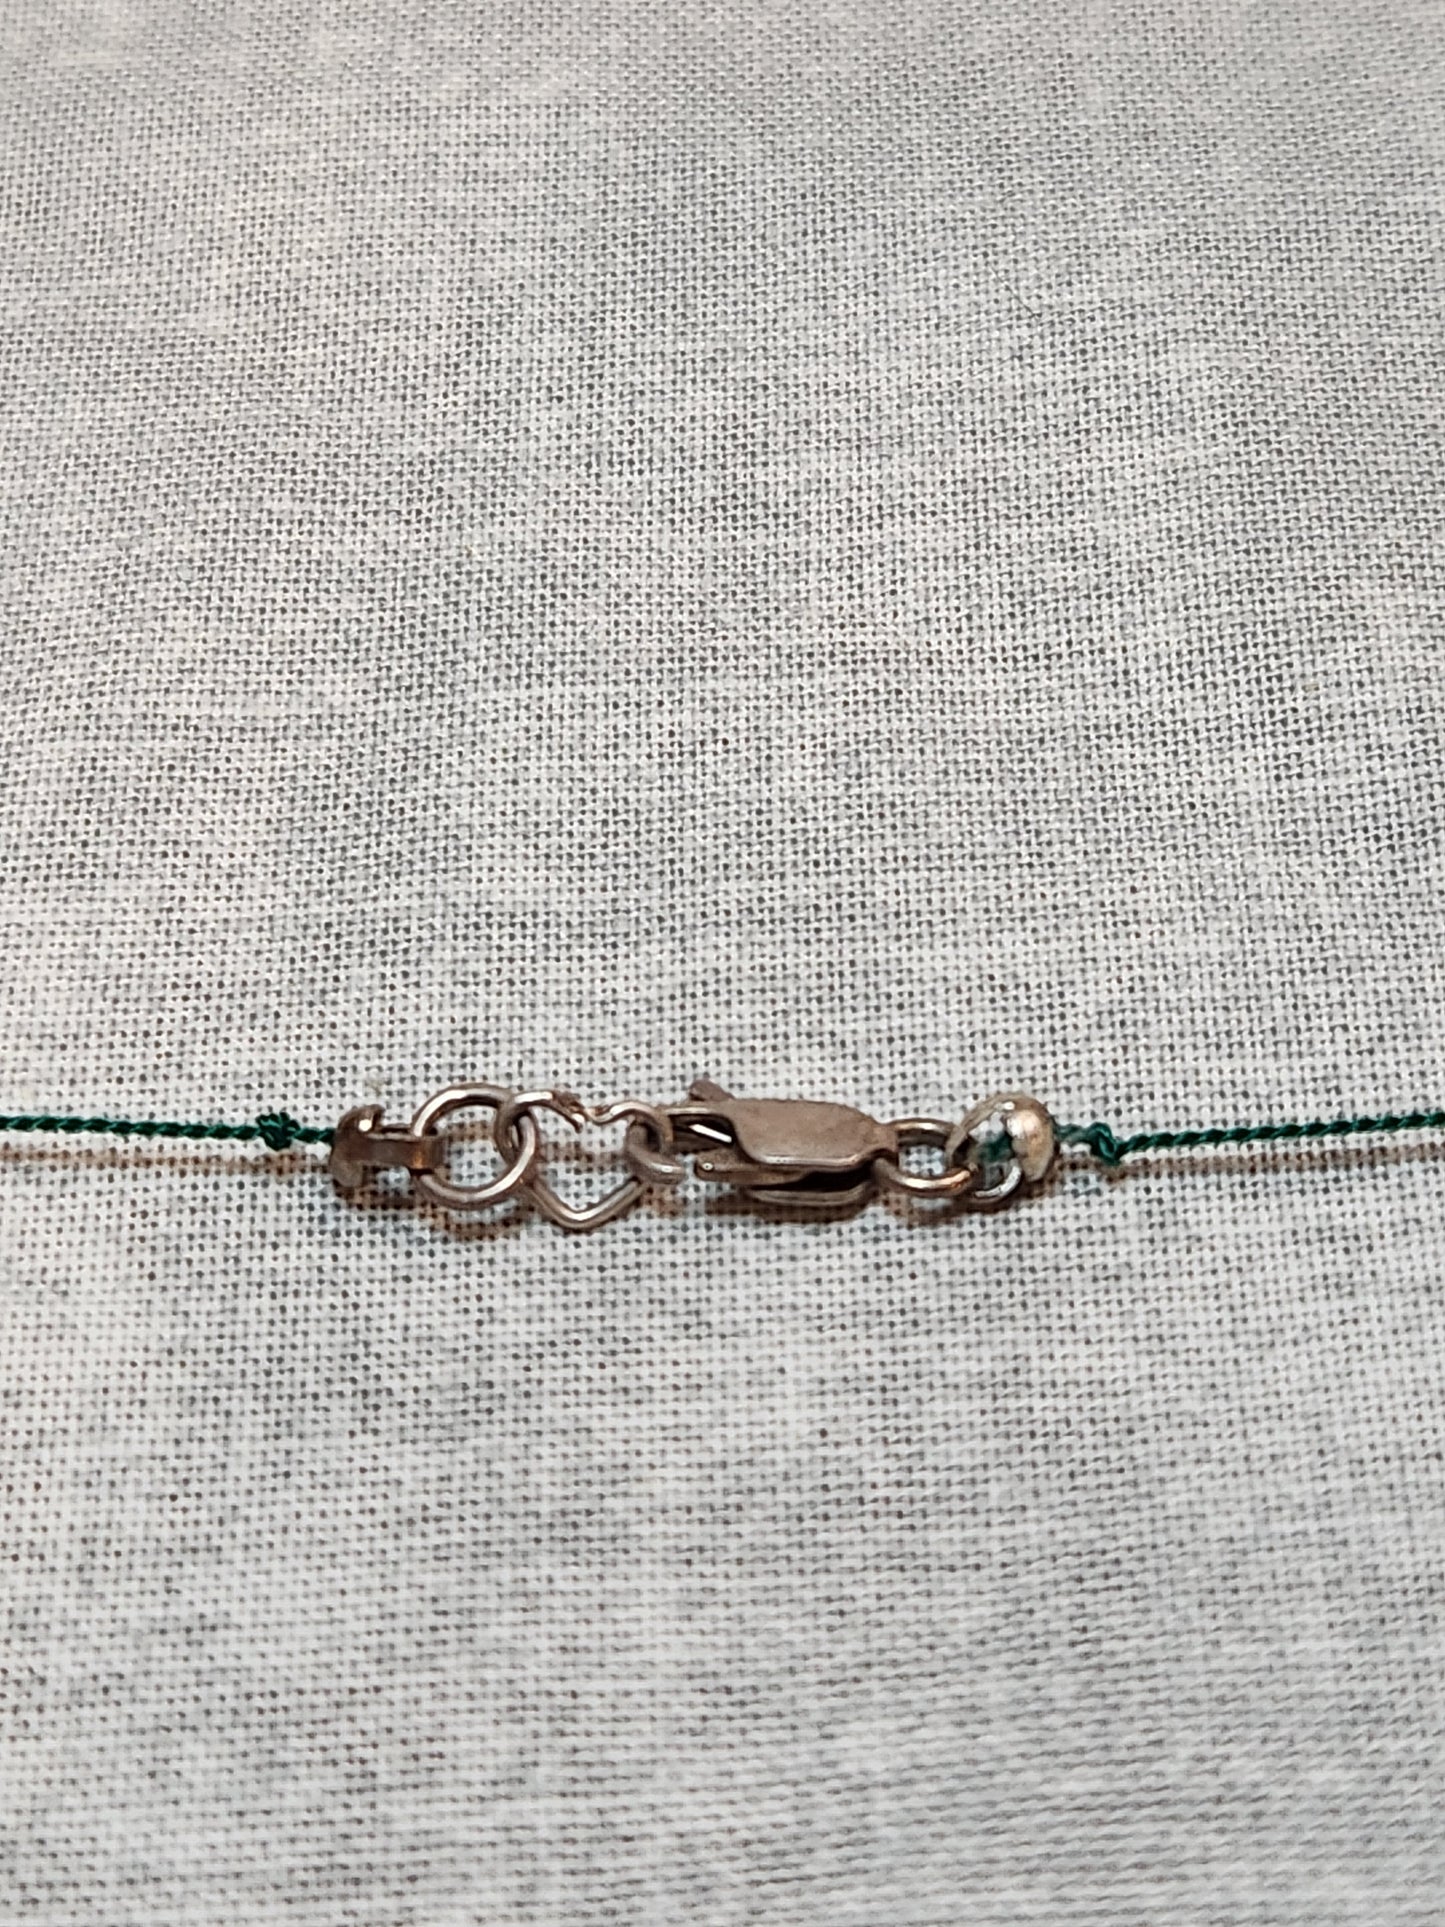 Ocean Sparkle Necklace